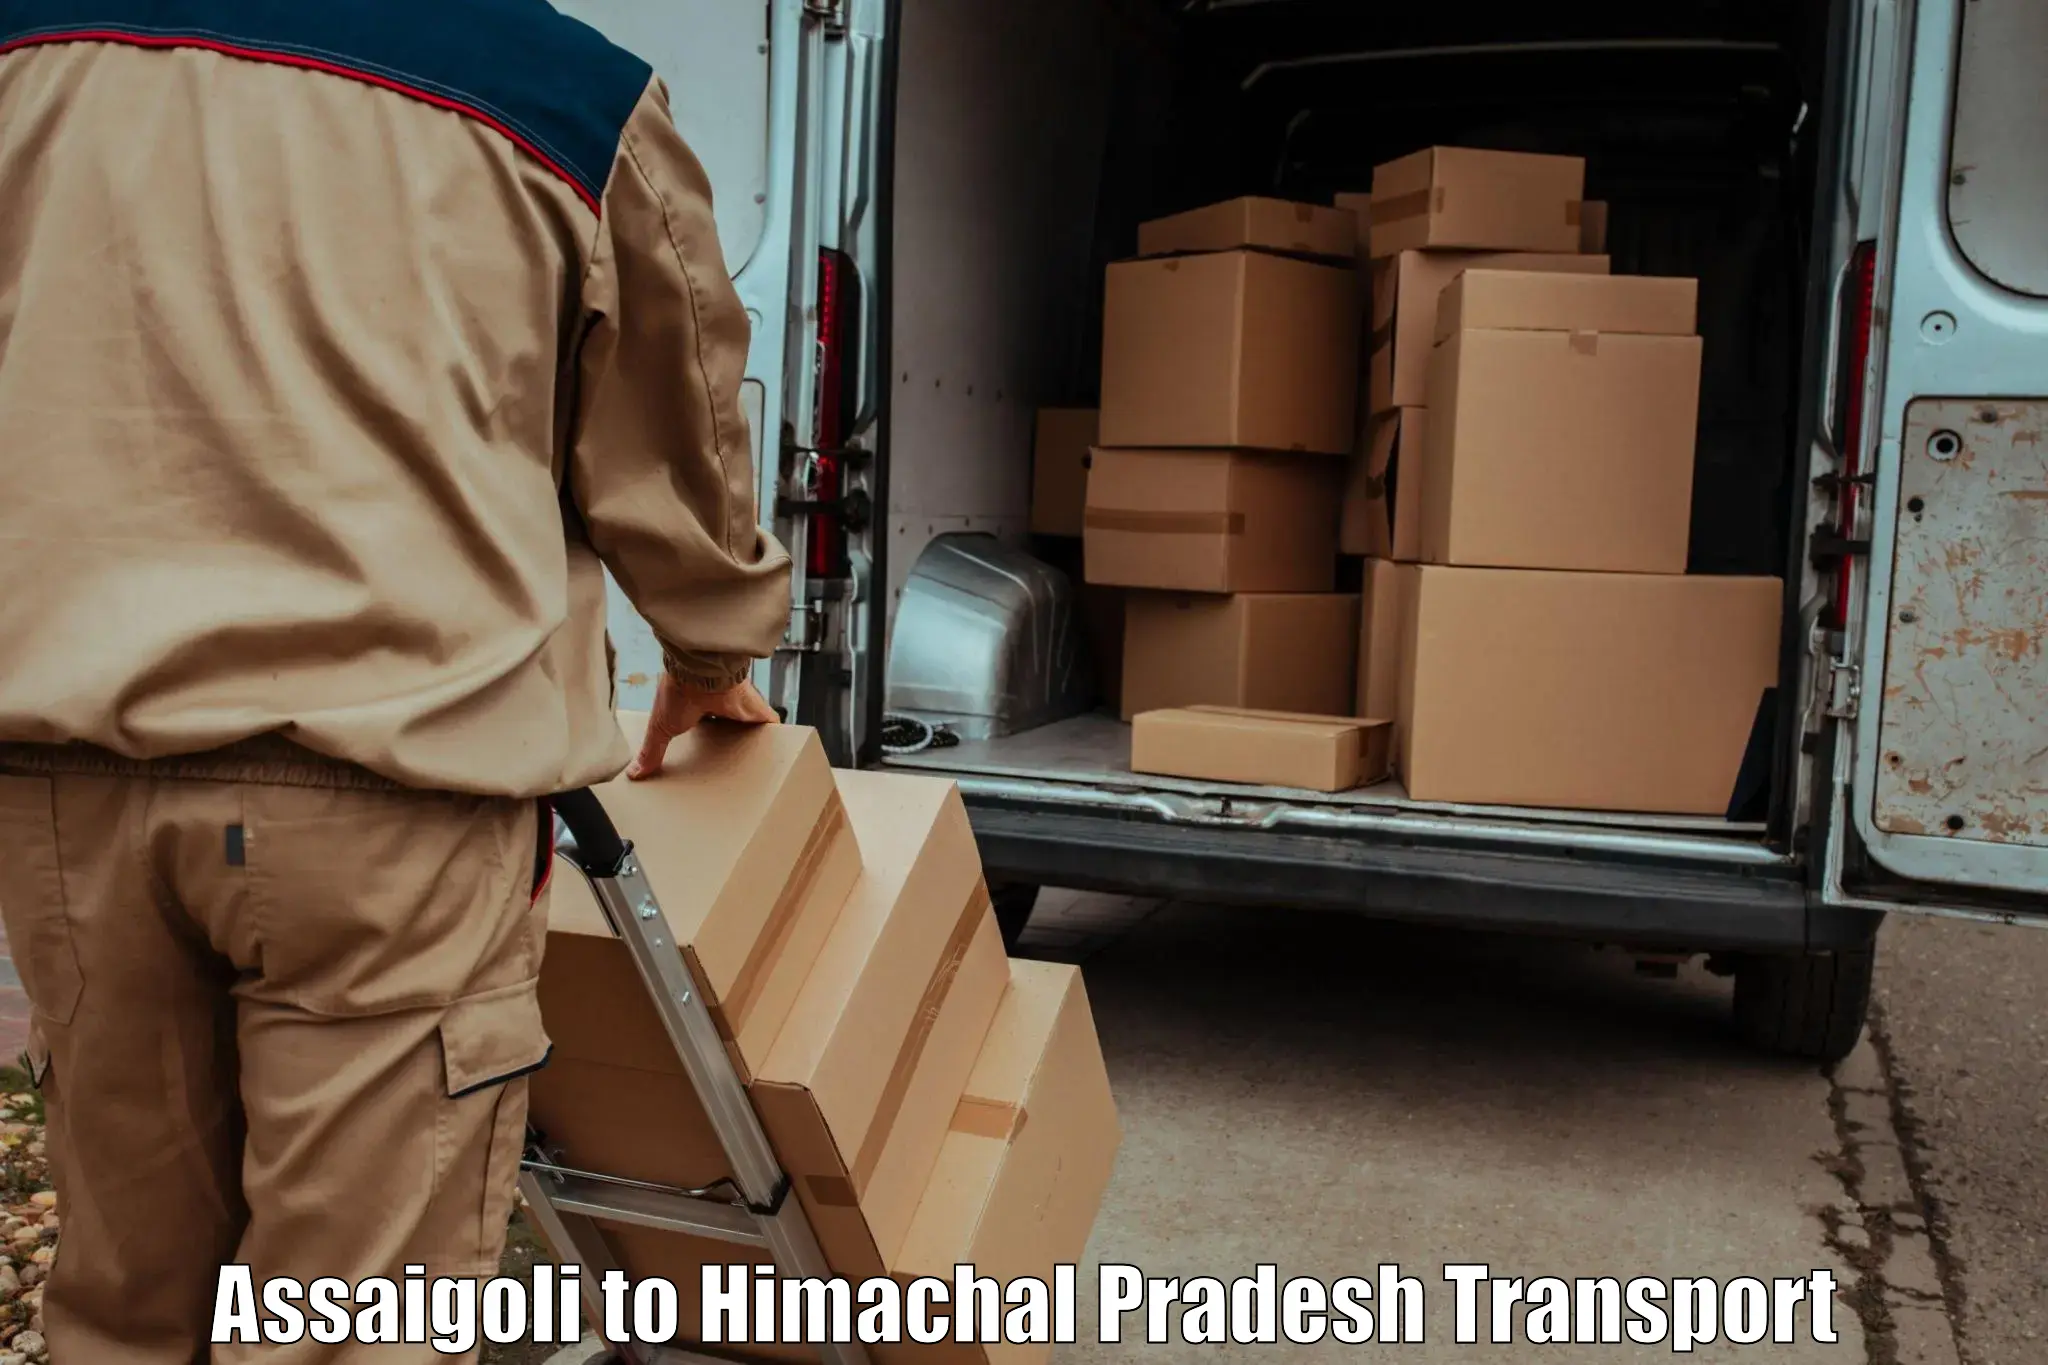 Two wheeler parcel service Assaigoli to Dheera